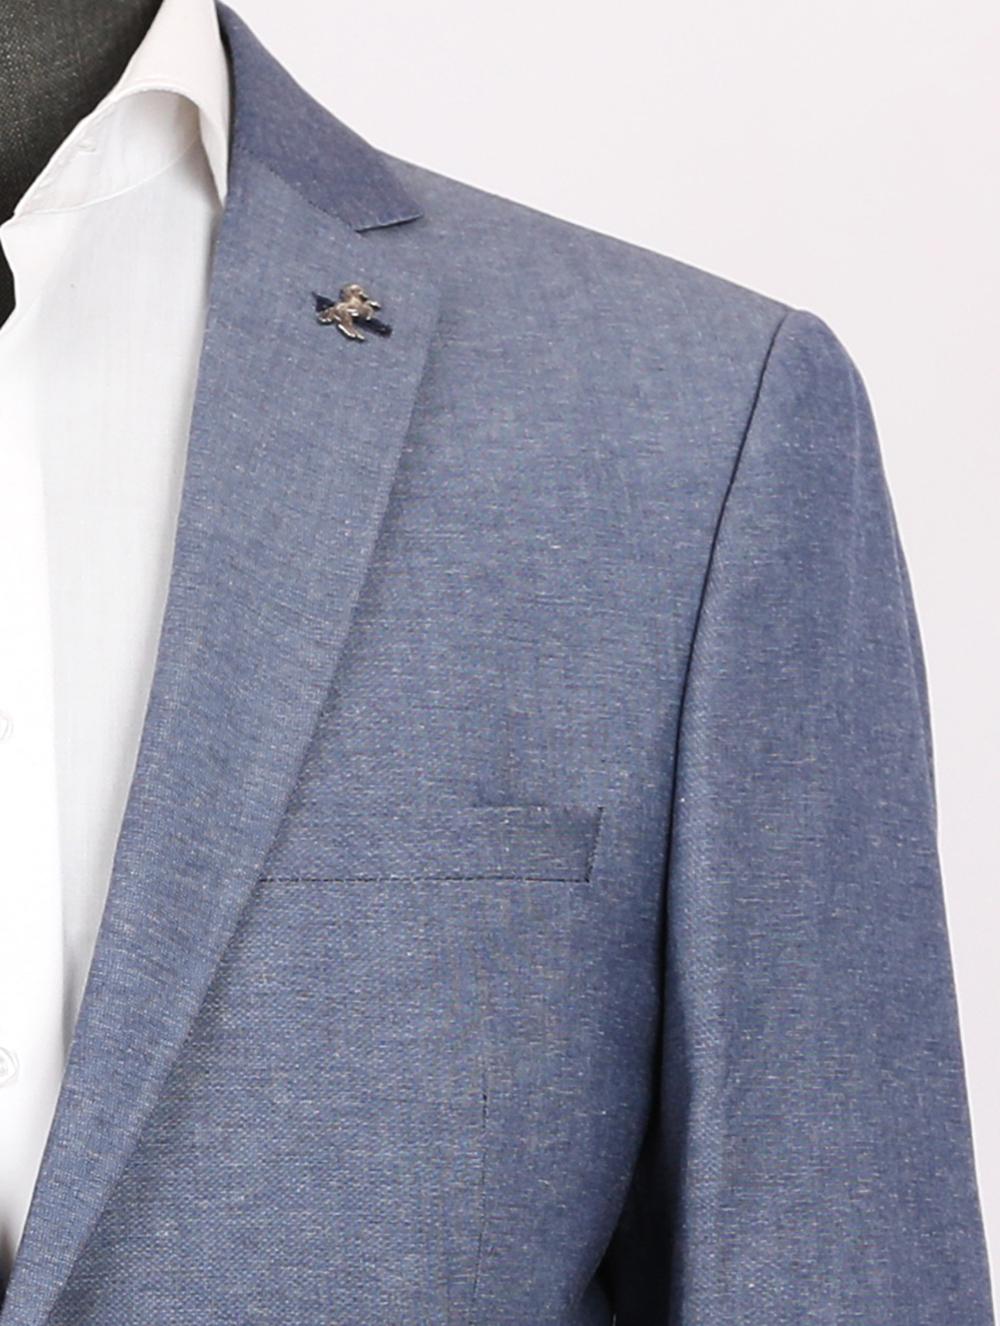 Easy Of Gray Bespoke Men Suit Tailored